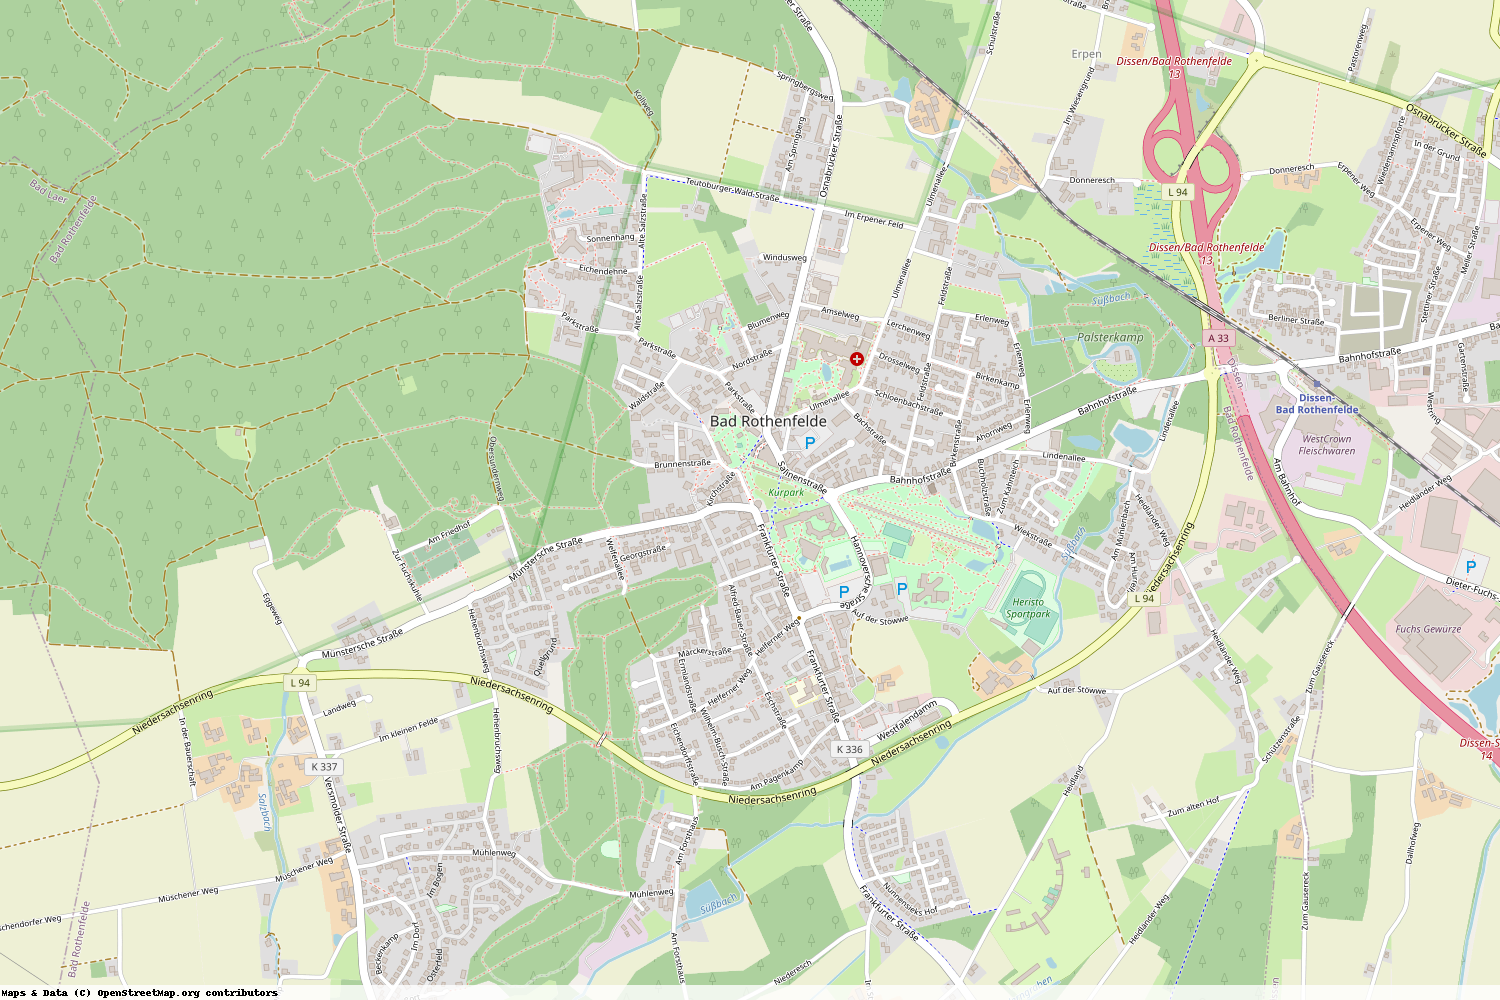 Ist gerade Stromausfall in Niedersachsen - Osnabrück - Bad Rothenfelde?